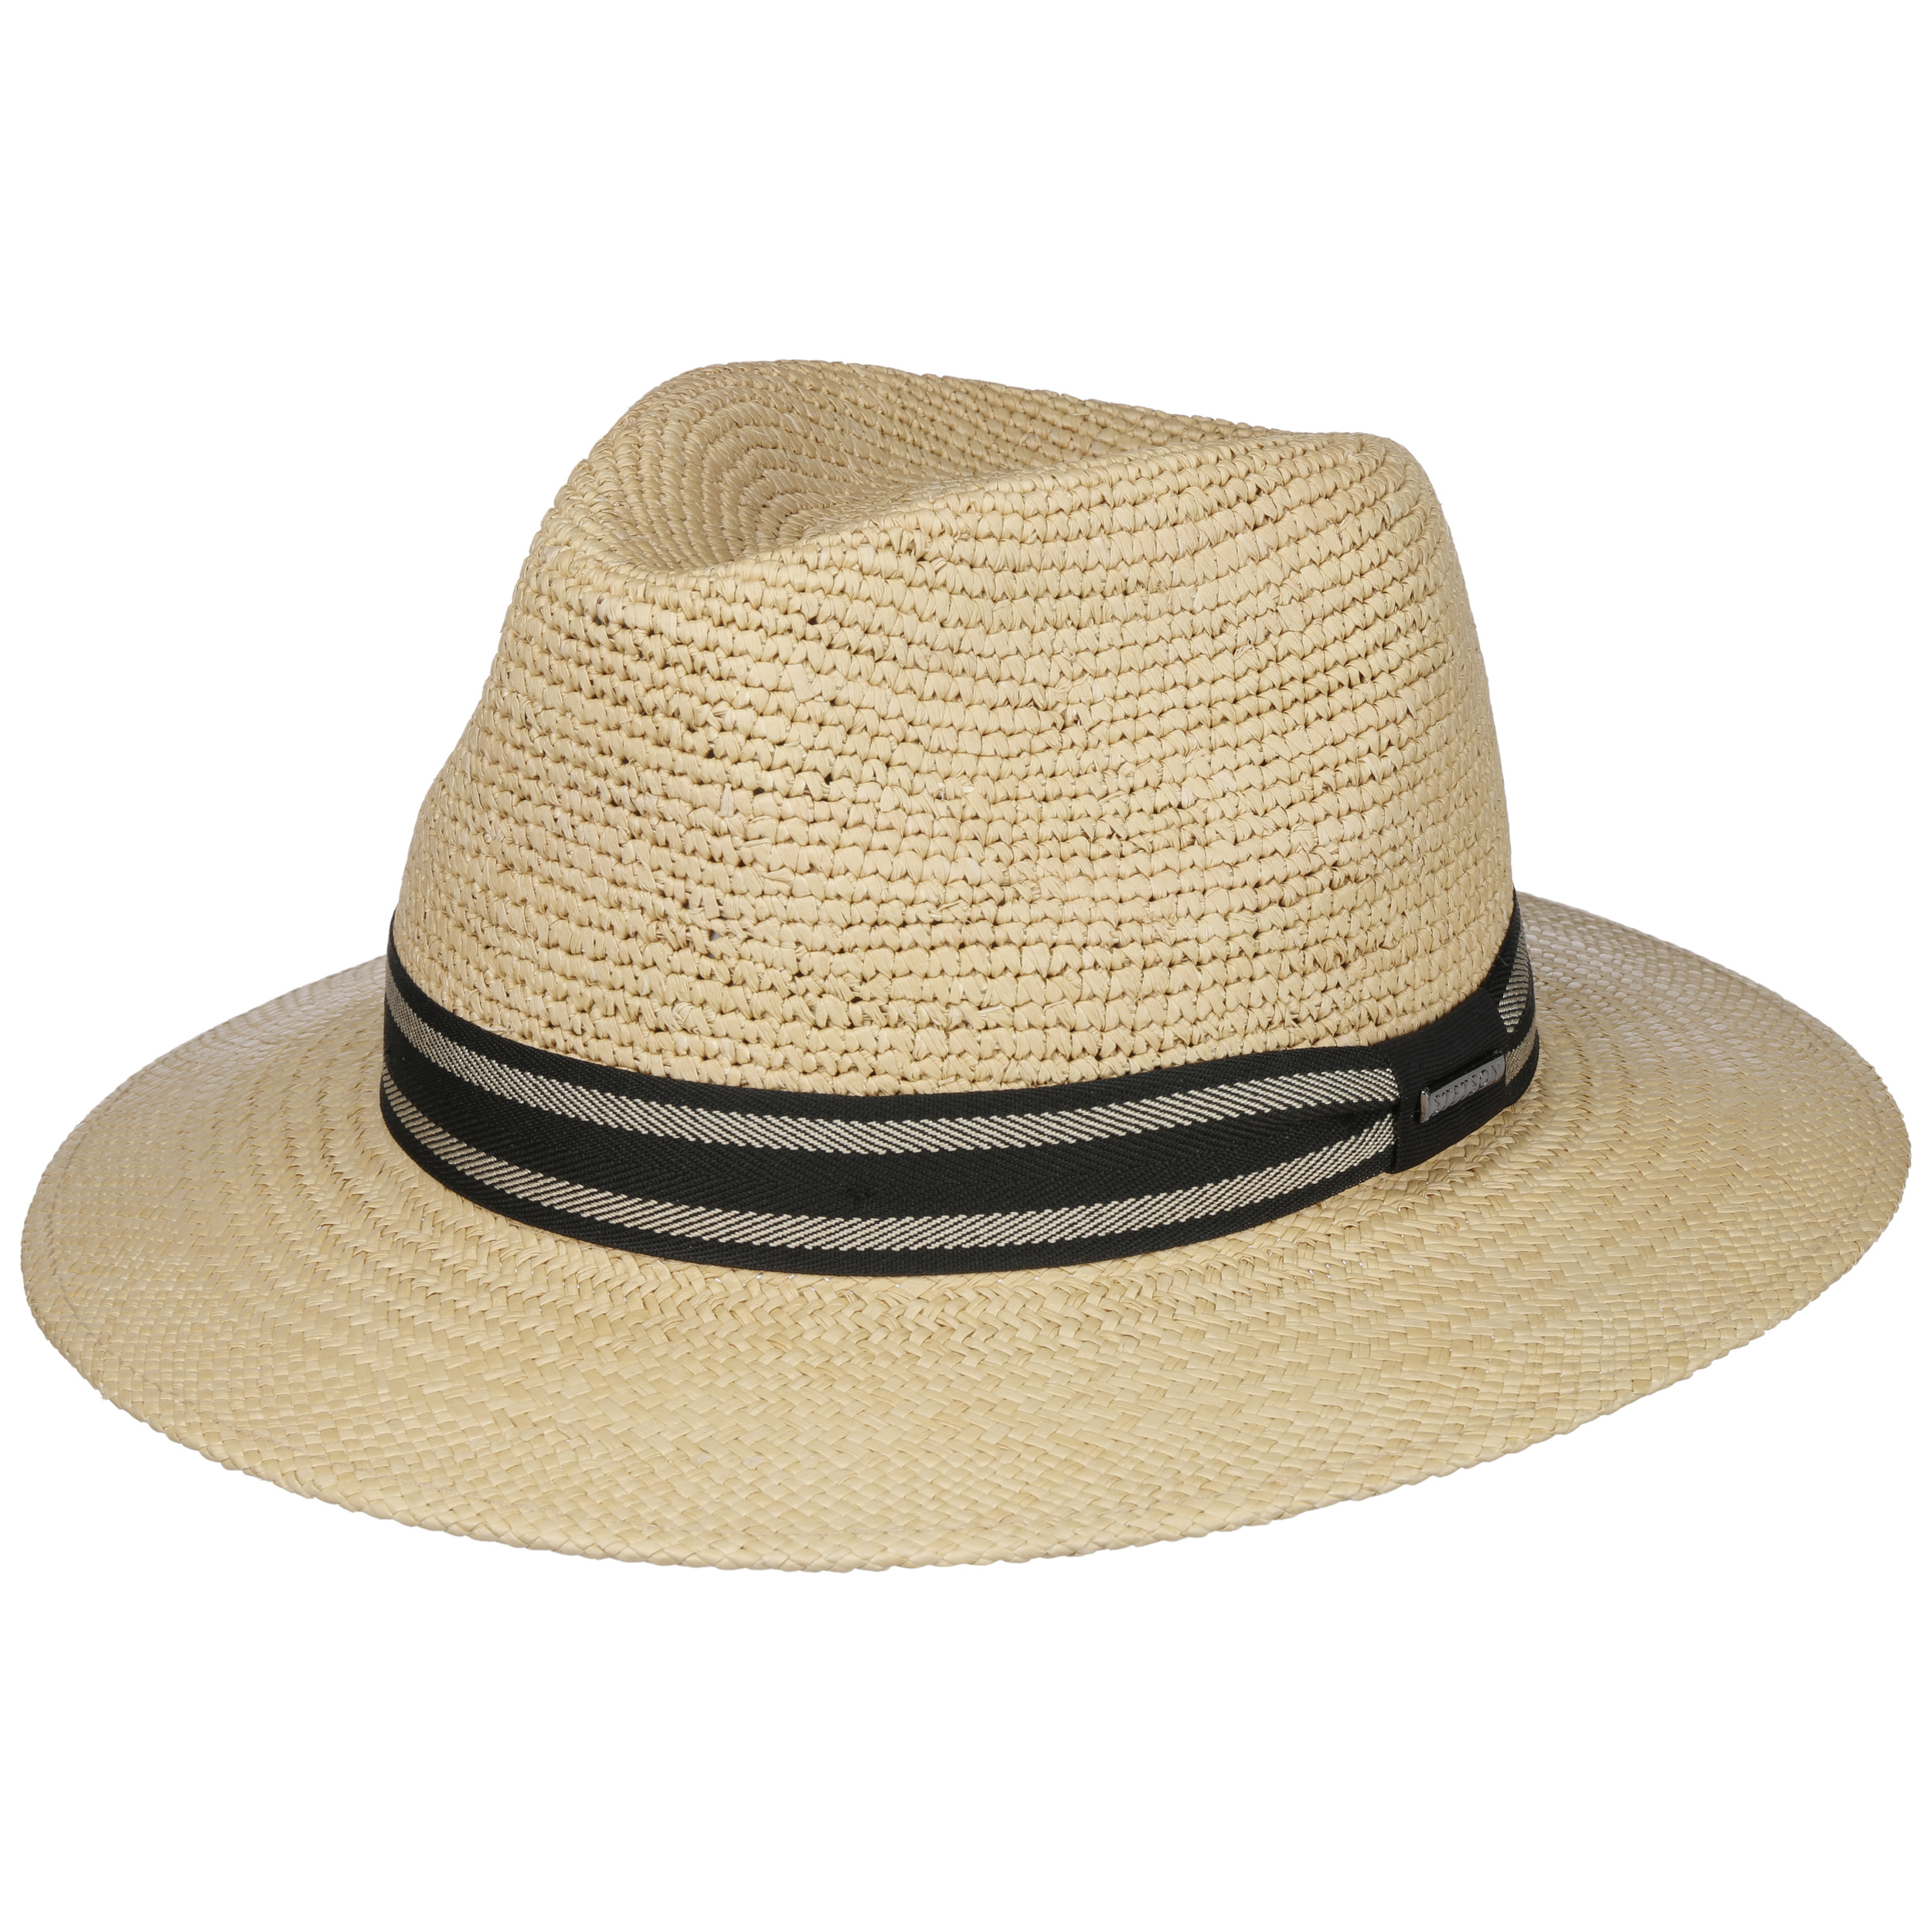 Crochet Traveller Panama Hat by Stetson - 219,00 €